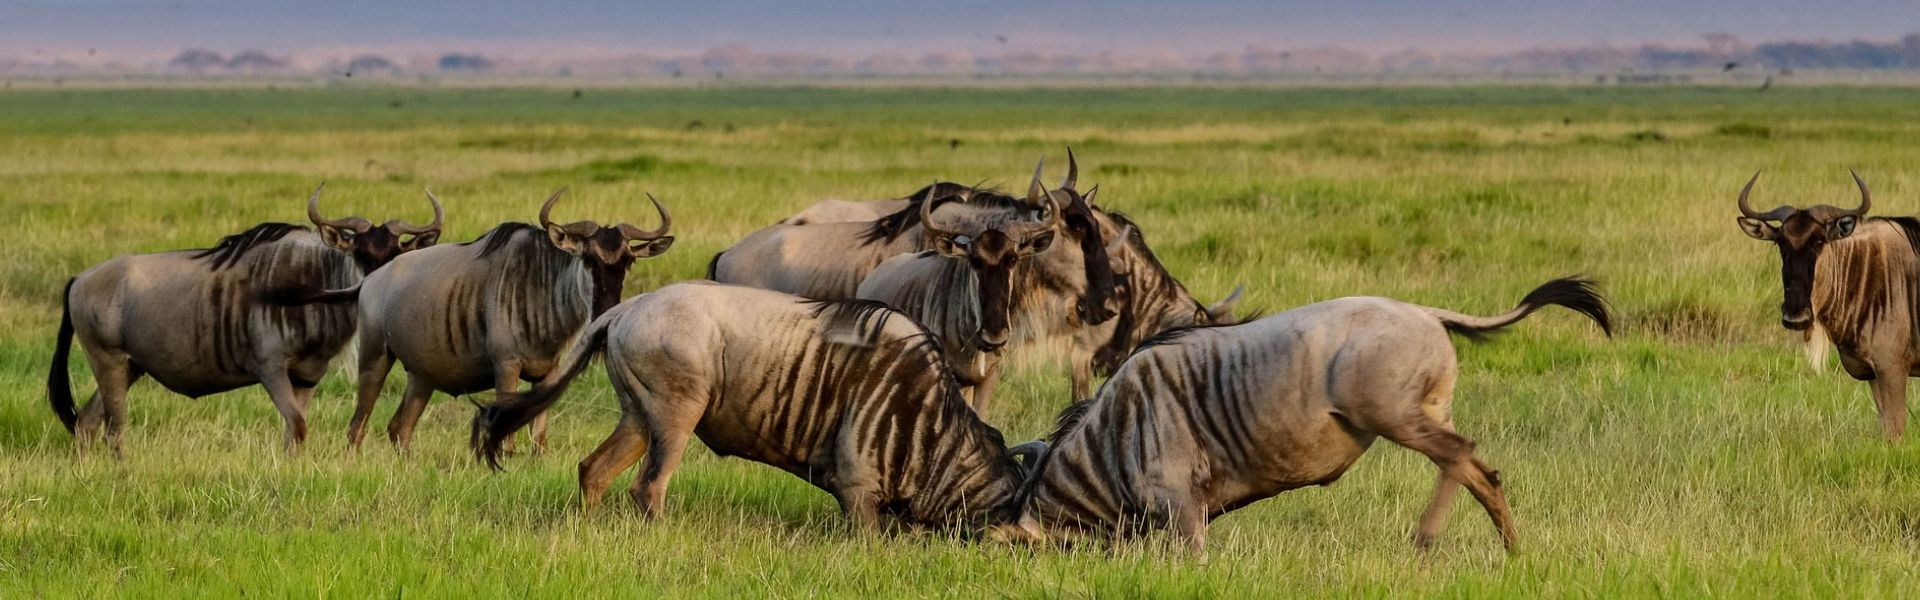 Tanzania Migration Safari 